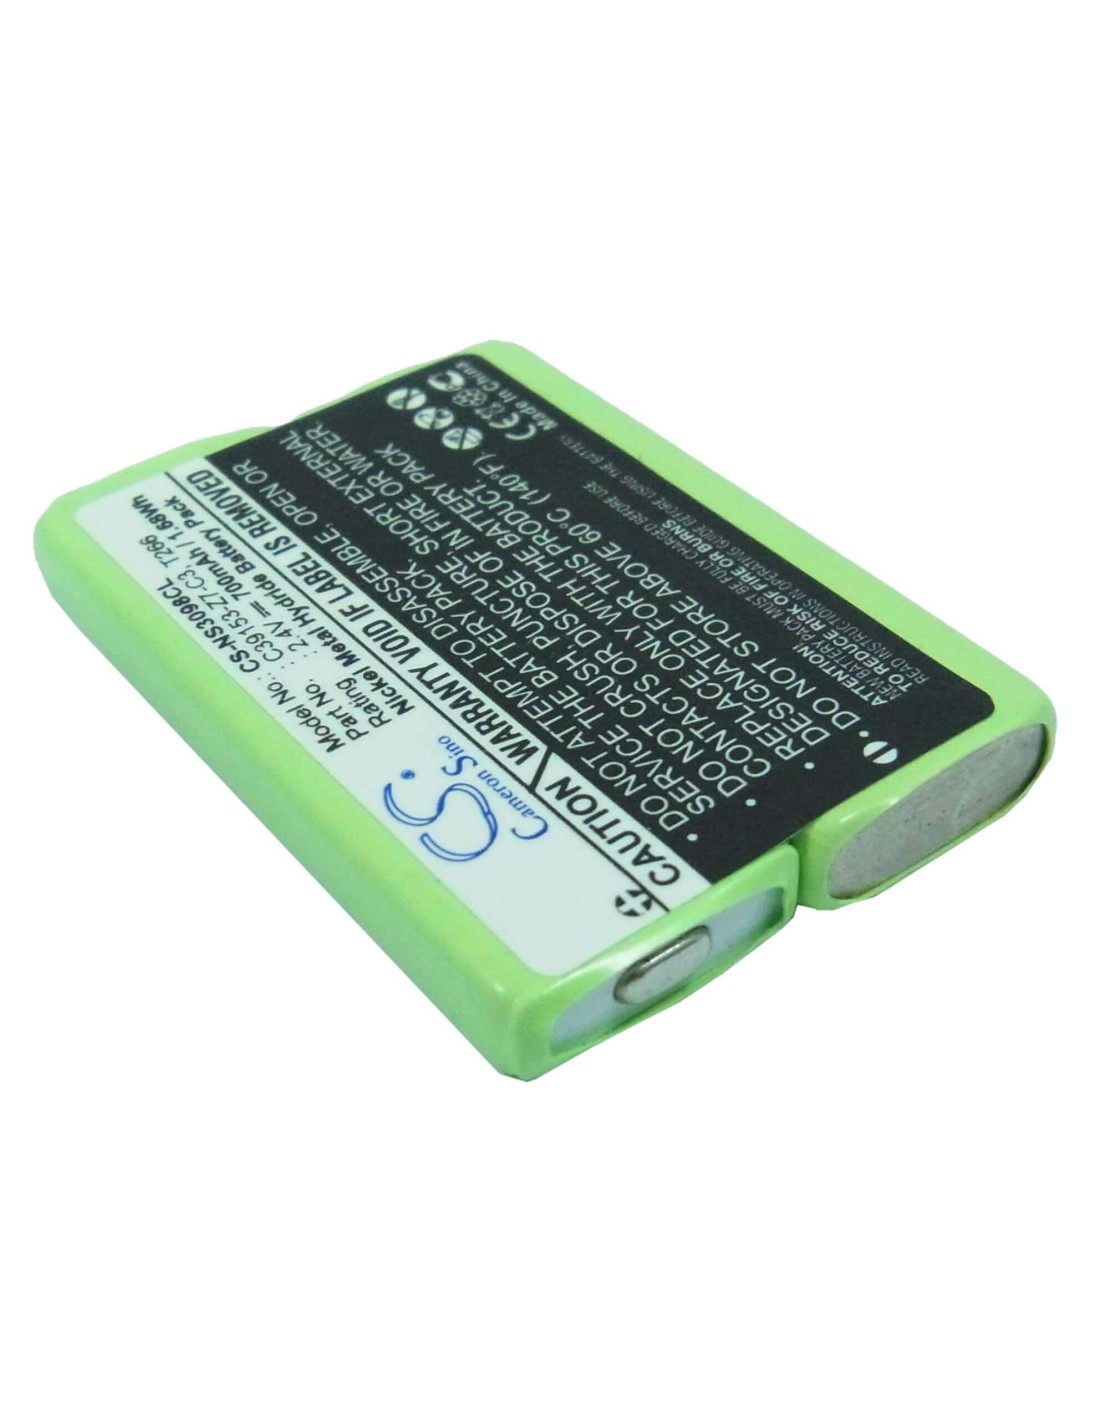 Battery for Telia, Free 3000, Free 3001 2.4V, 700mAh - 1.68Wh